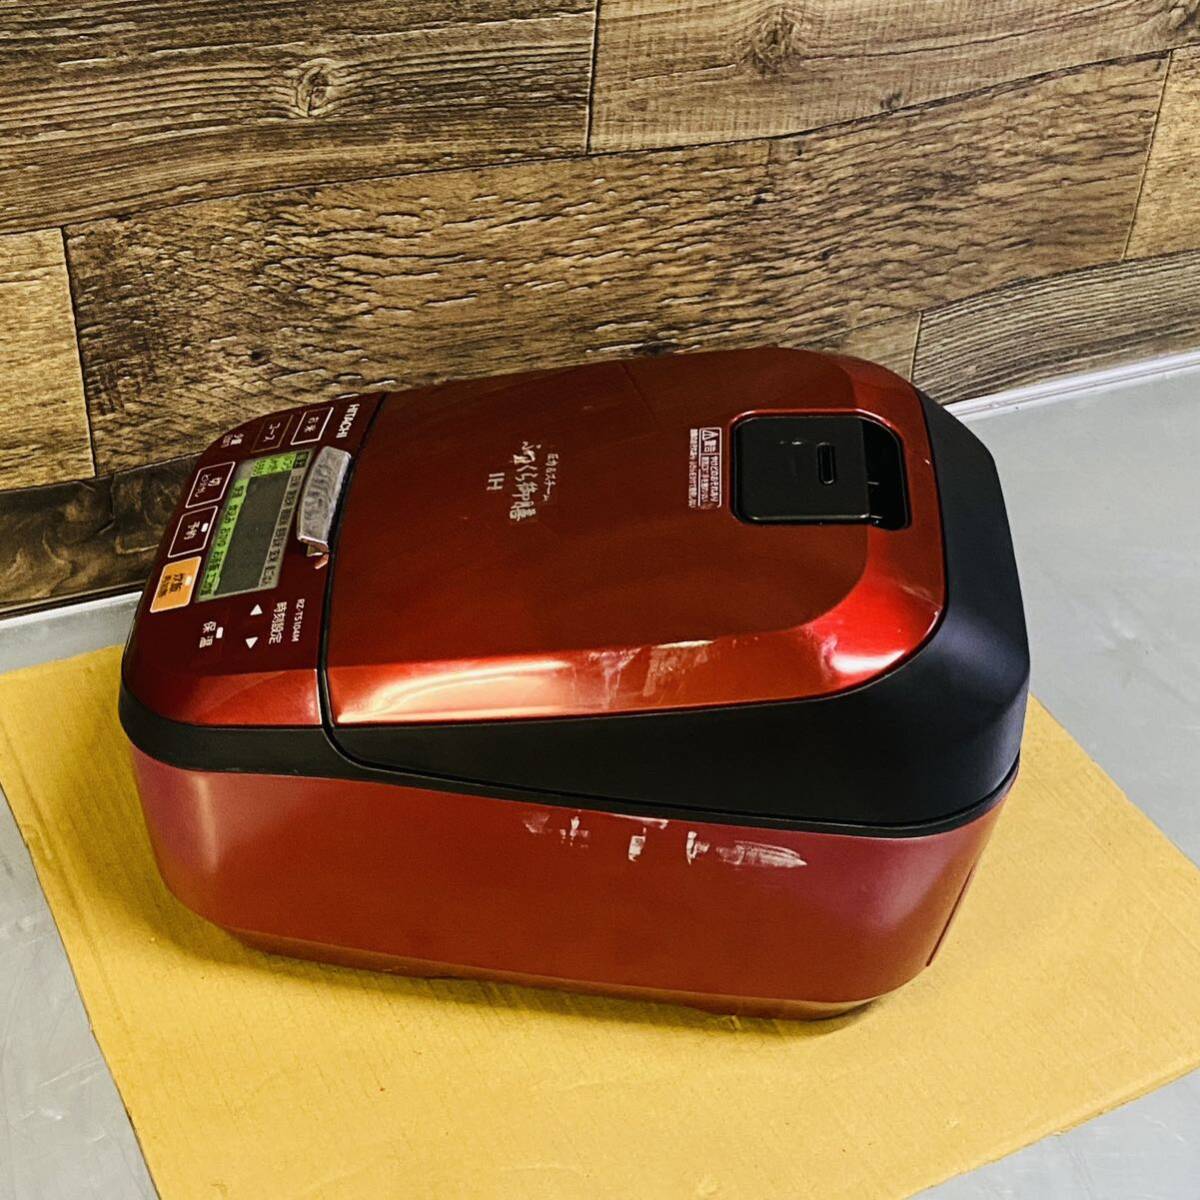 IHジャー炊飯器 HITACHI RZ-TS104M ルビーレッド 炊飯容量 1.0L 5合炊き 簡易動作確認済み の画像9